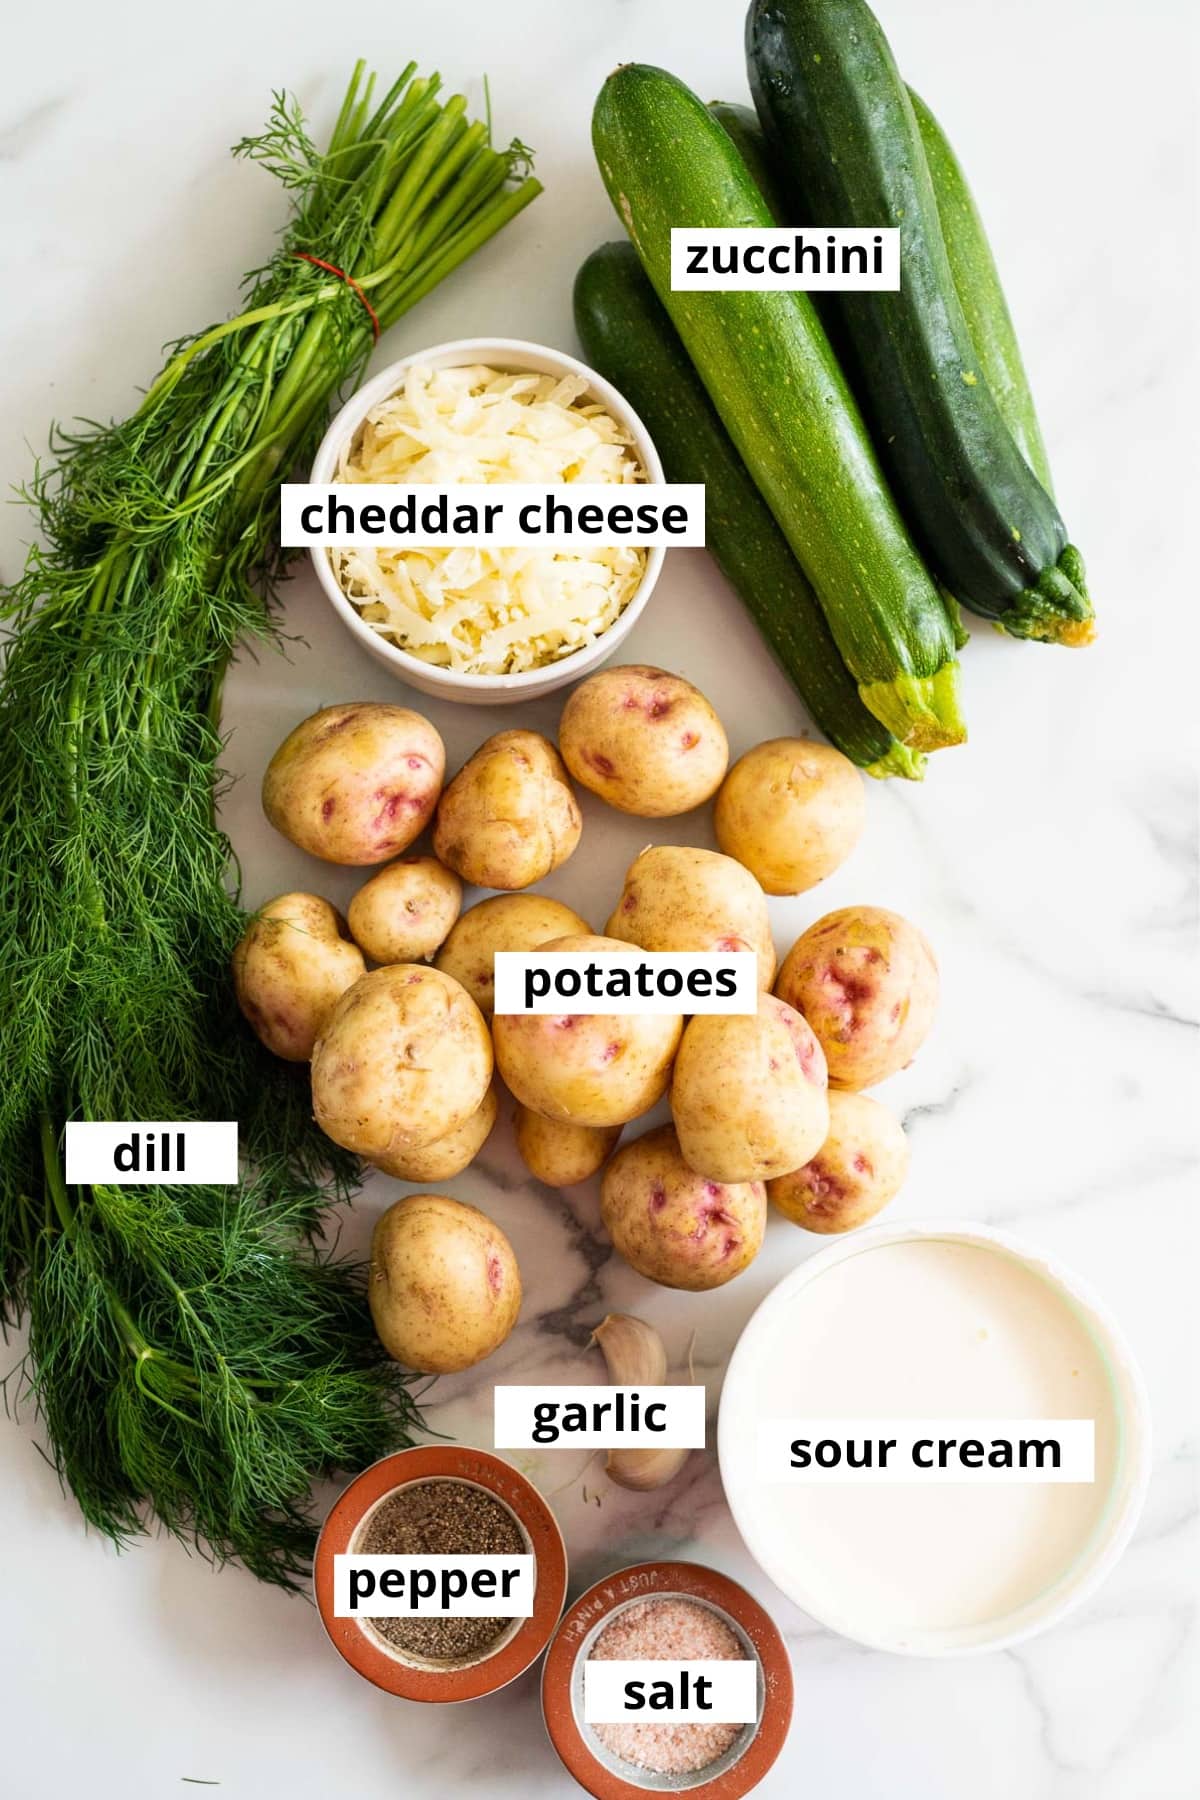 Zucchini, potatoes, cheddar cheese, dill, potatoes, garlic, sour cream, salt and pepper.